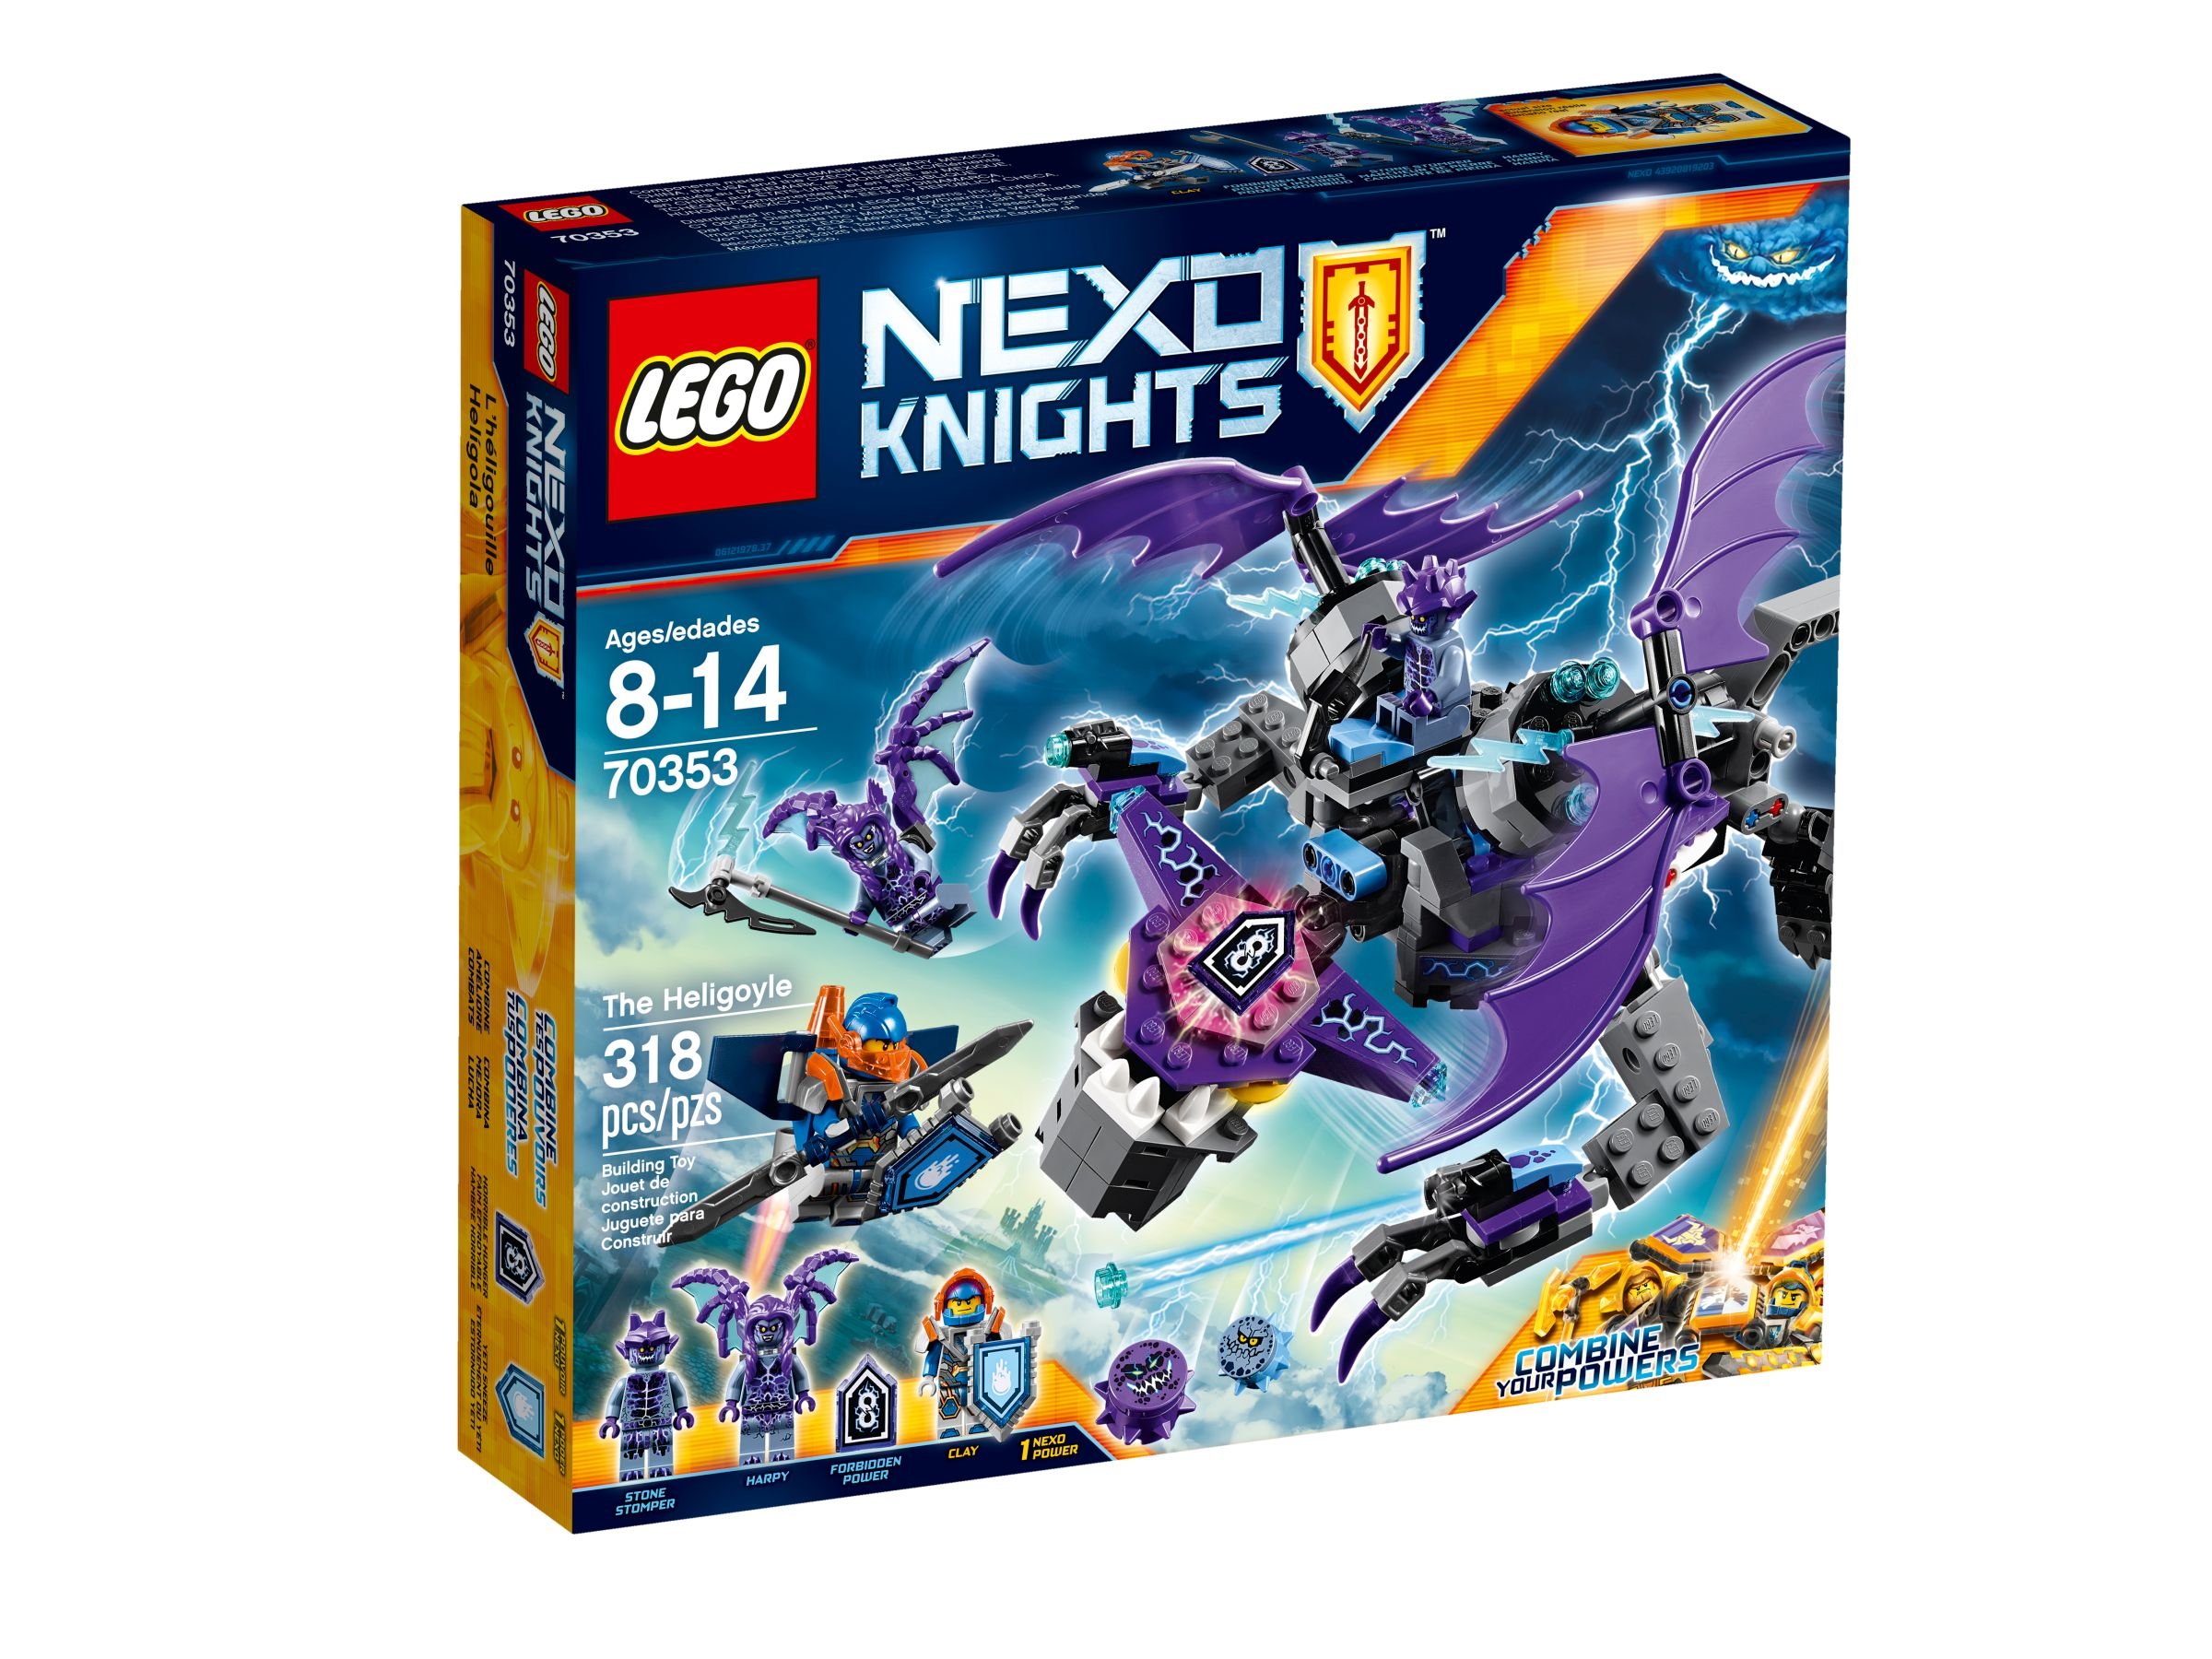 LEGO Nexo Knights 70353 Der Gargoyl-Heli LEGO_70353_alt1.jpg